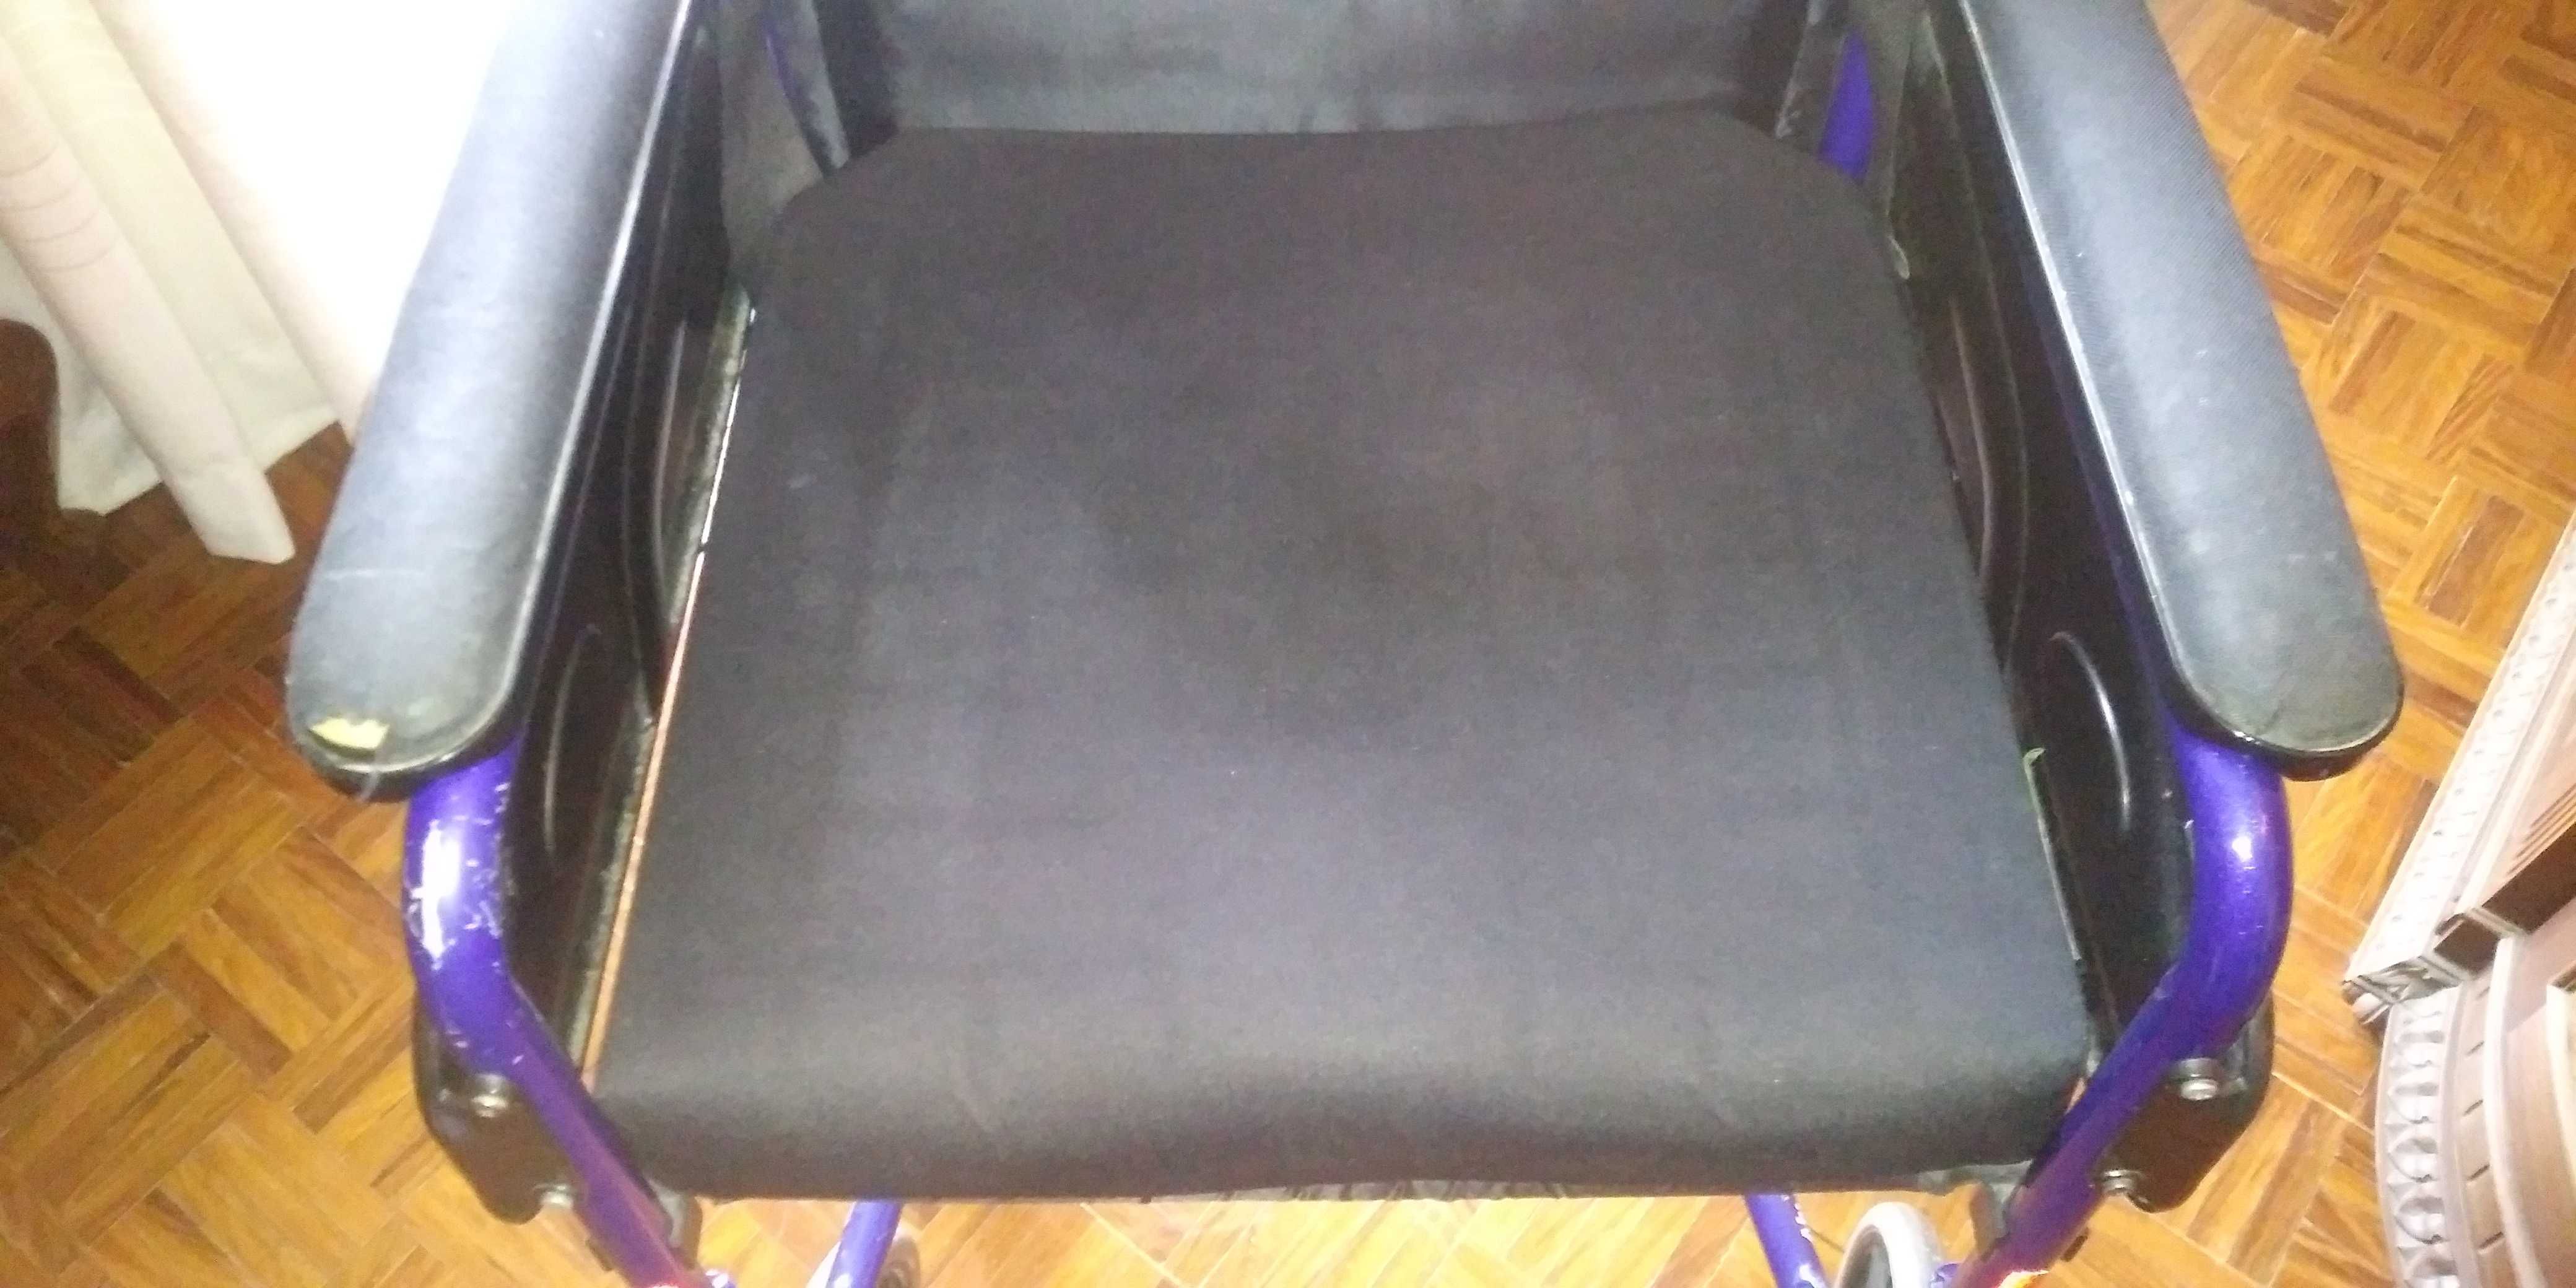 Almofada anti escaras para cadeira de rodas com base de madeira.